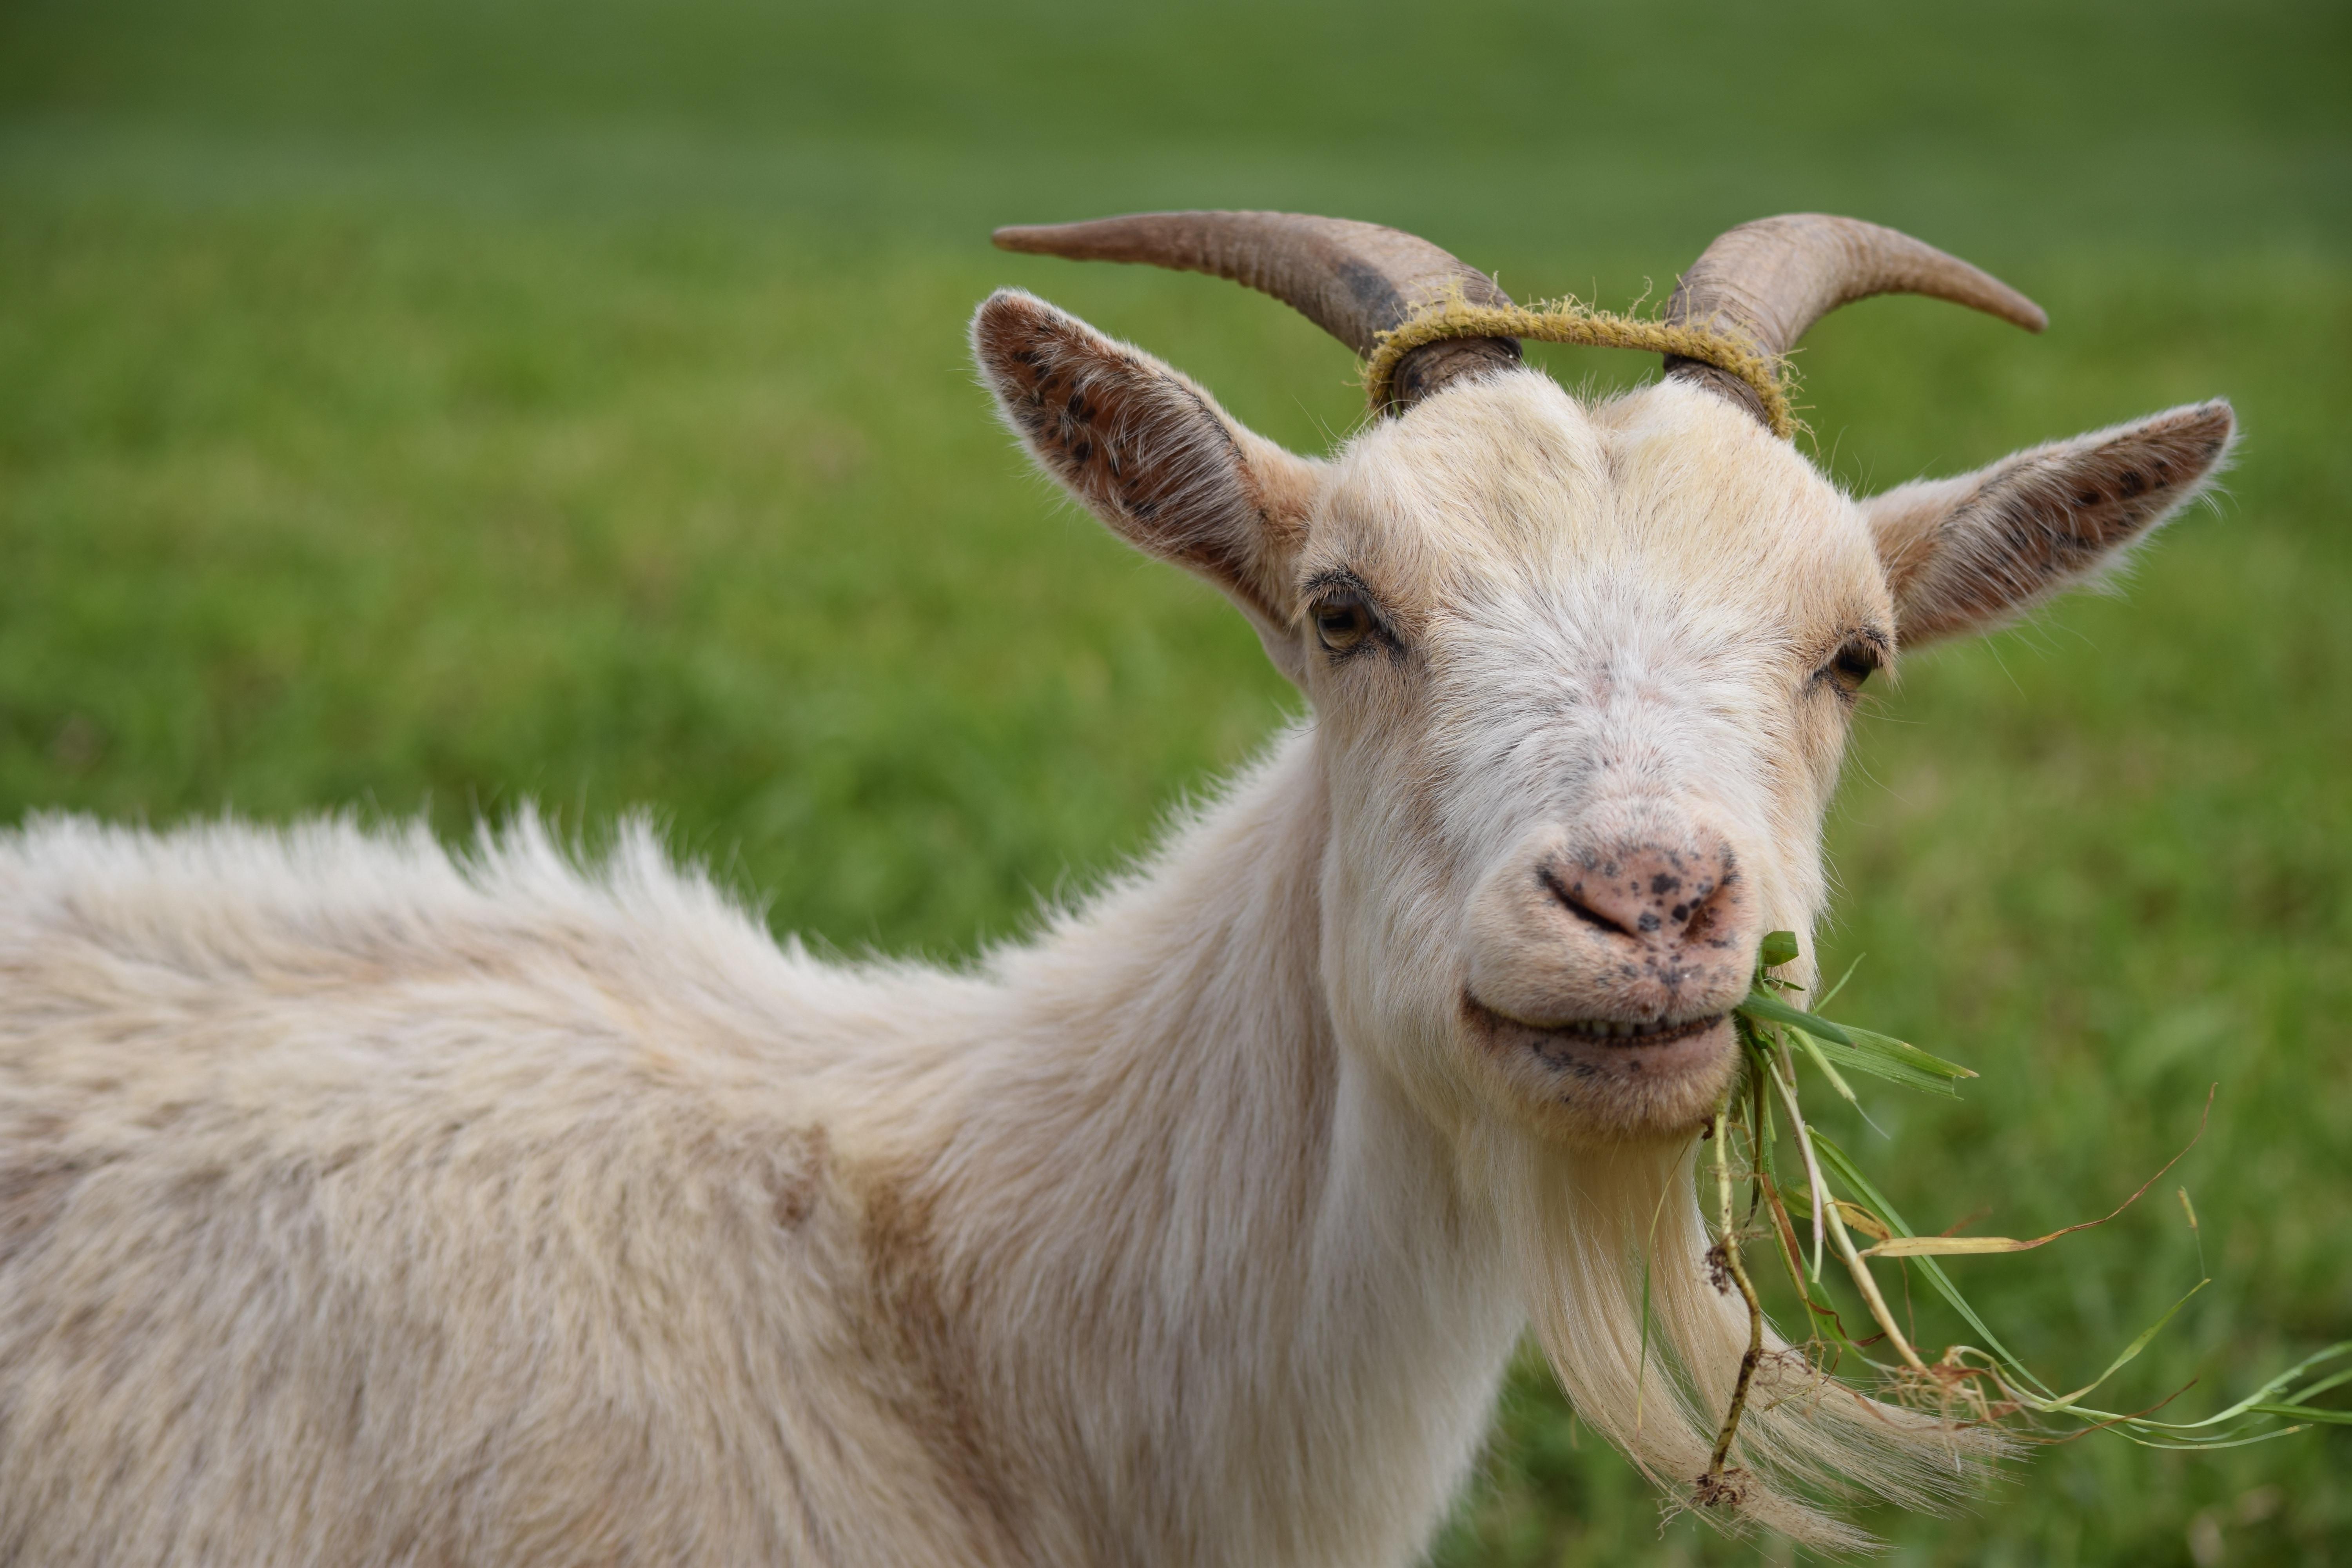 Eating, Animal, Goat, Grass, Livestock, one animal, grass